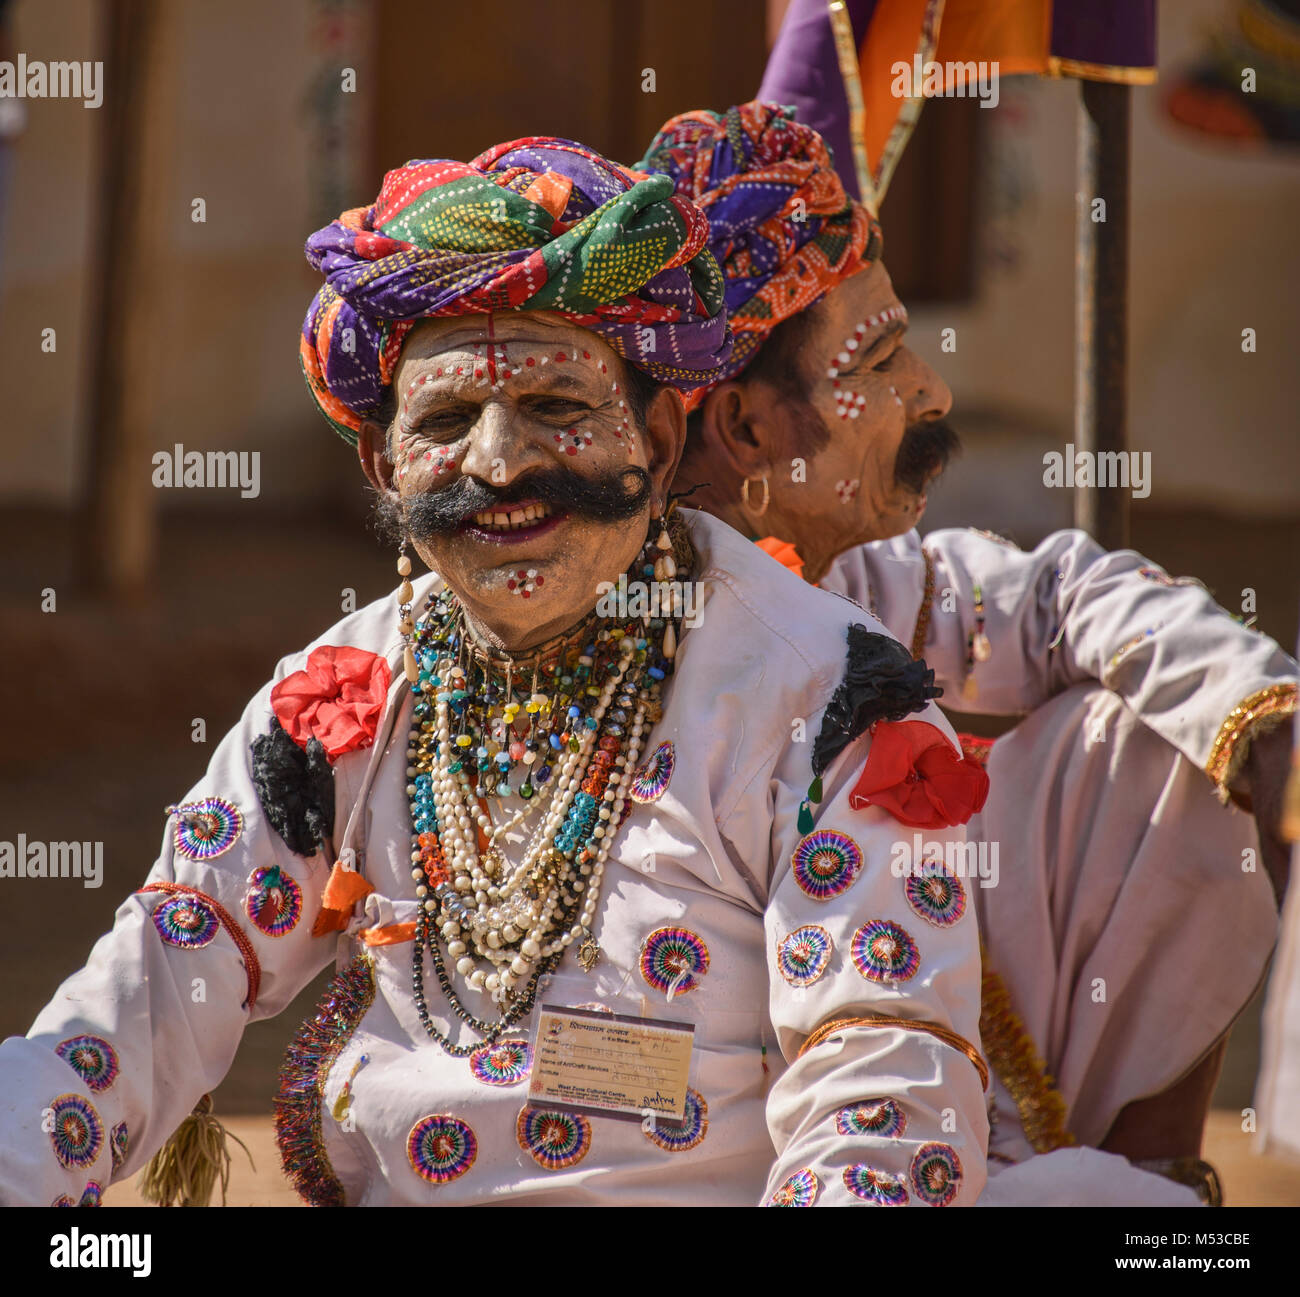 Rajasthani man with his colorful turban, Rajasthan, India Stock Photo